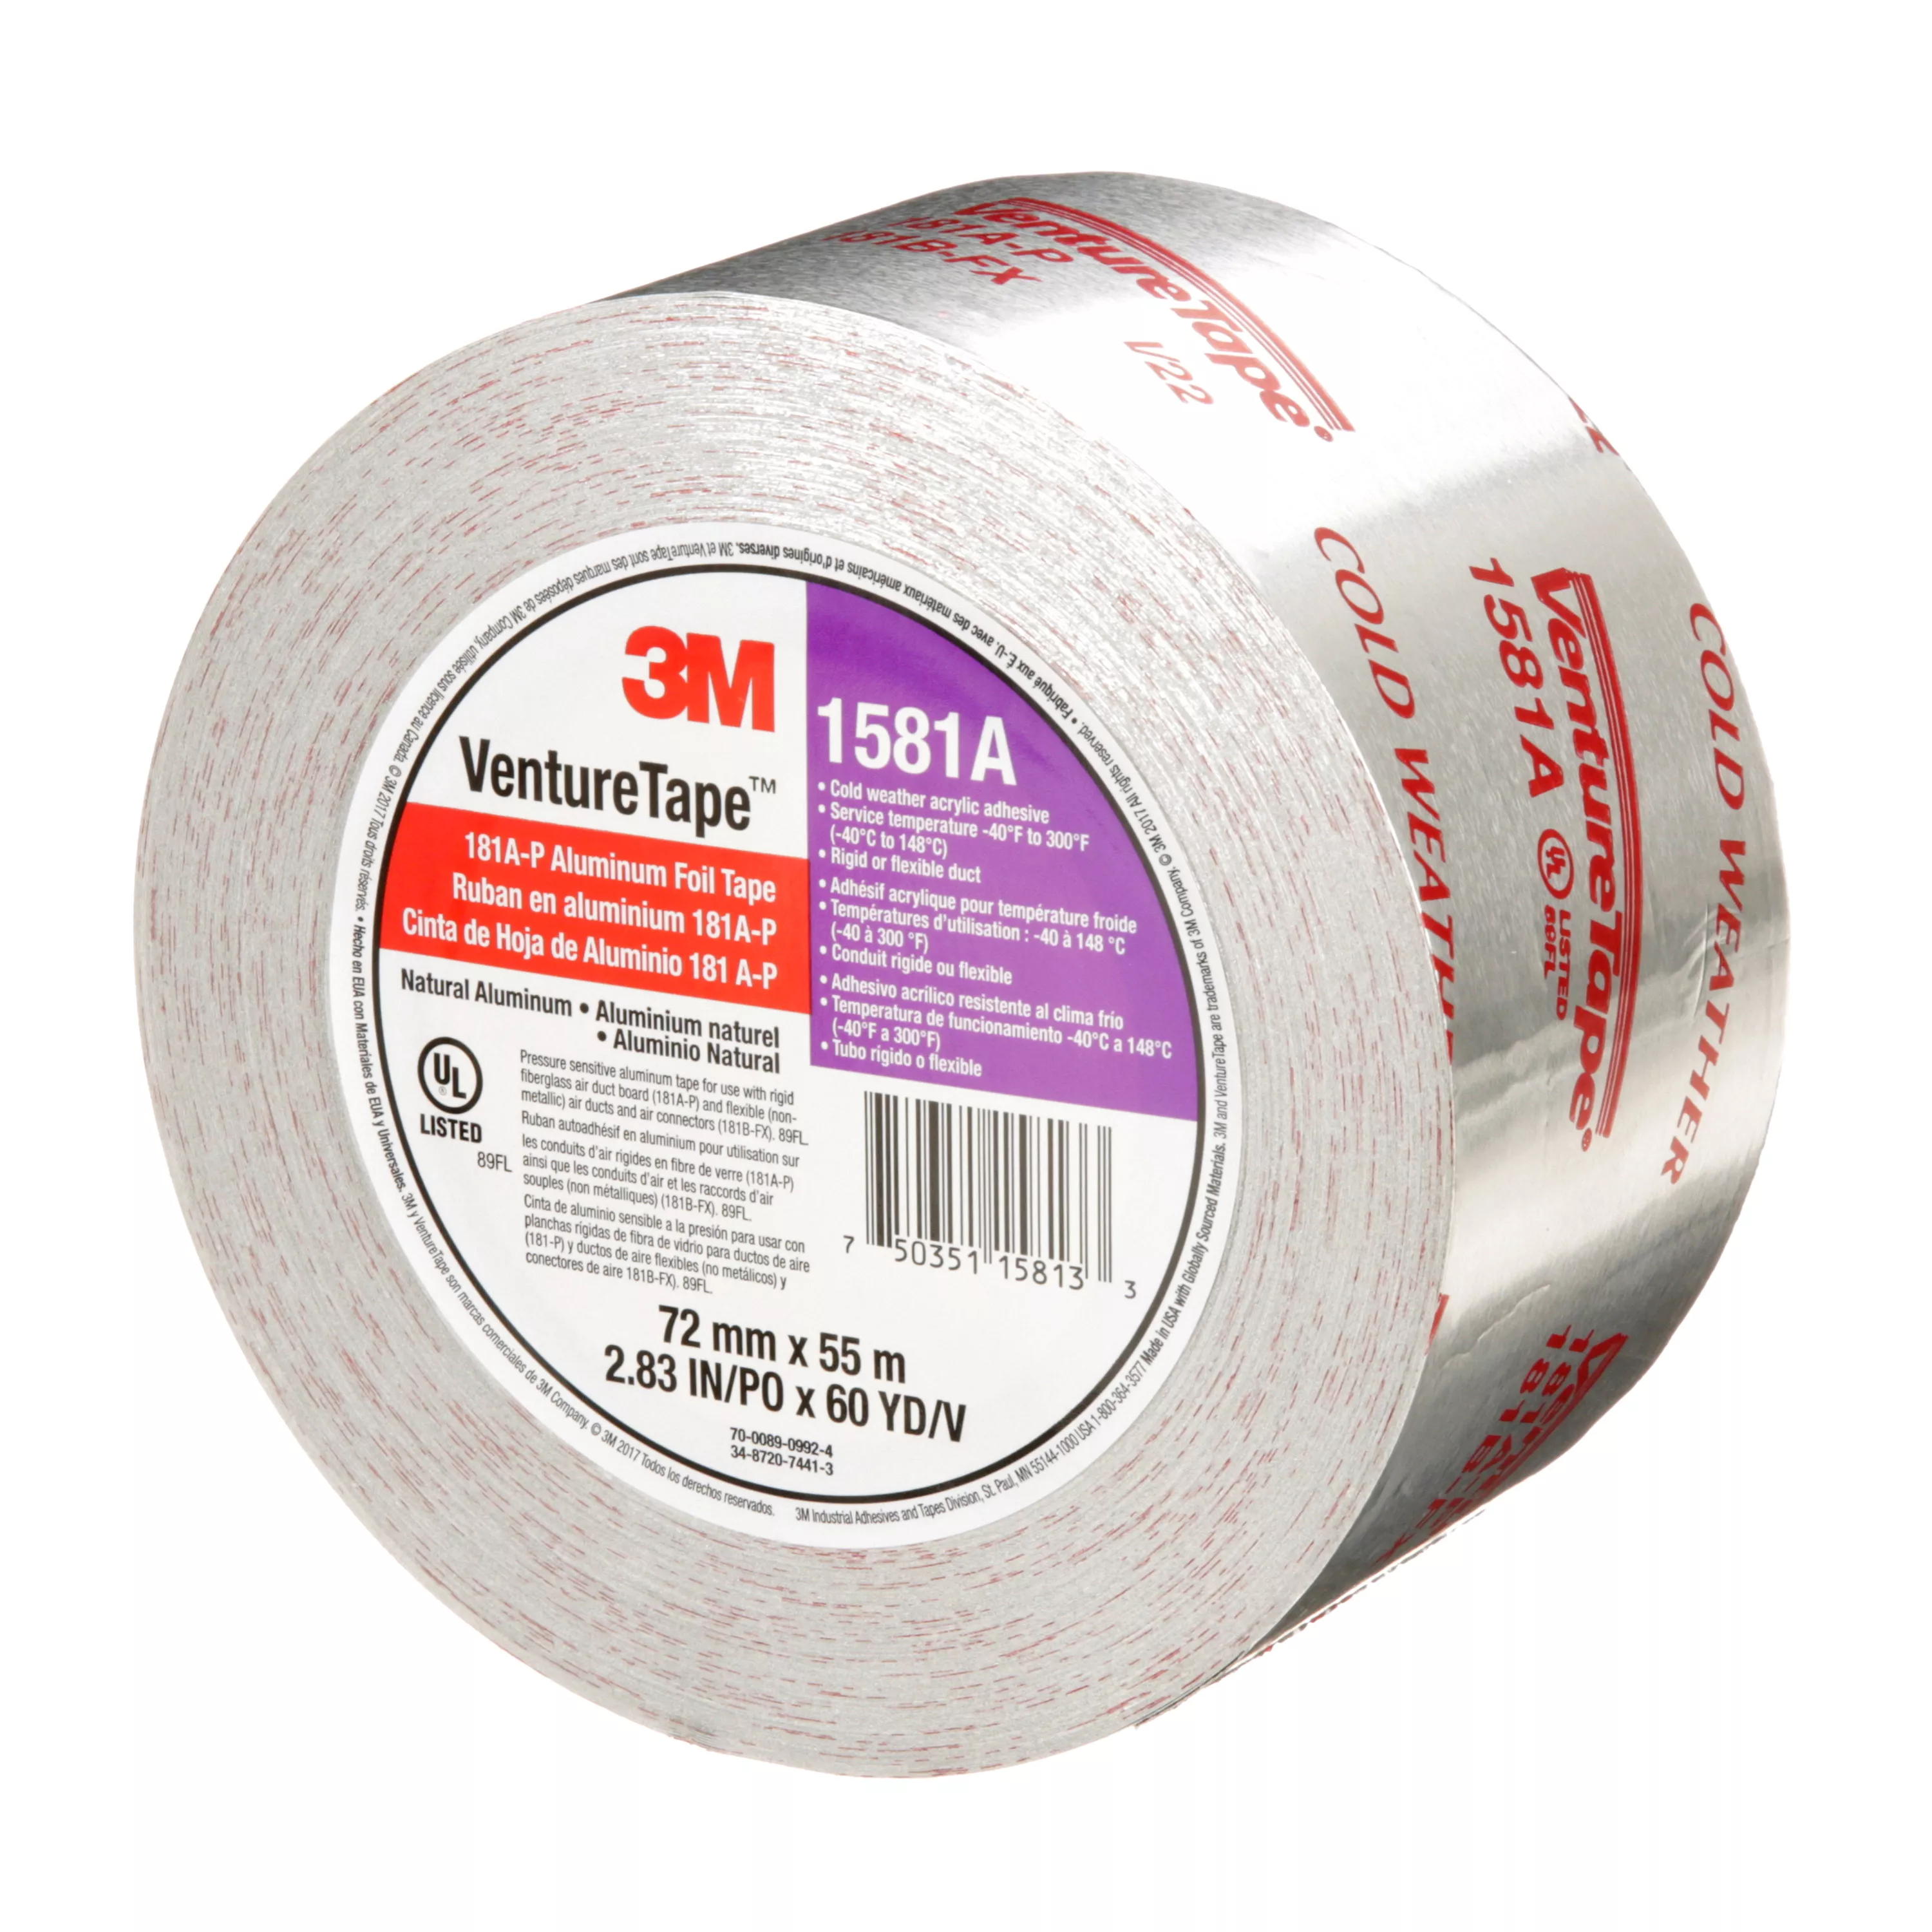 SKU 7100043929 | 3M™ Venture Tape™ UL181A-P Aluminum Foil Tape 1581A